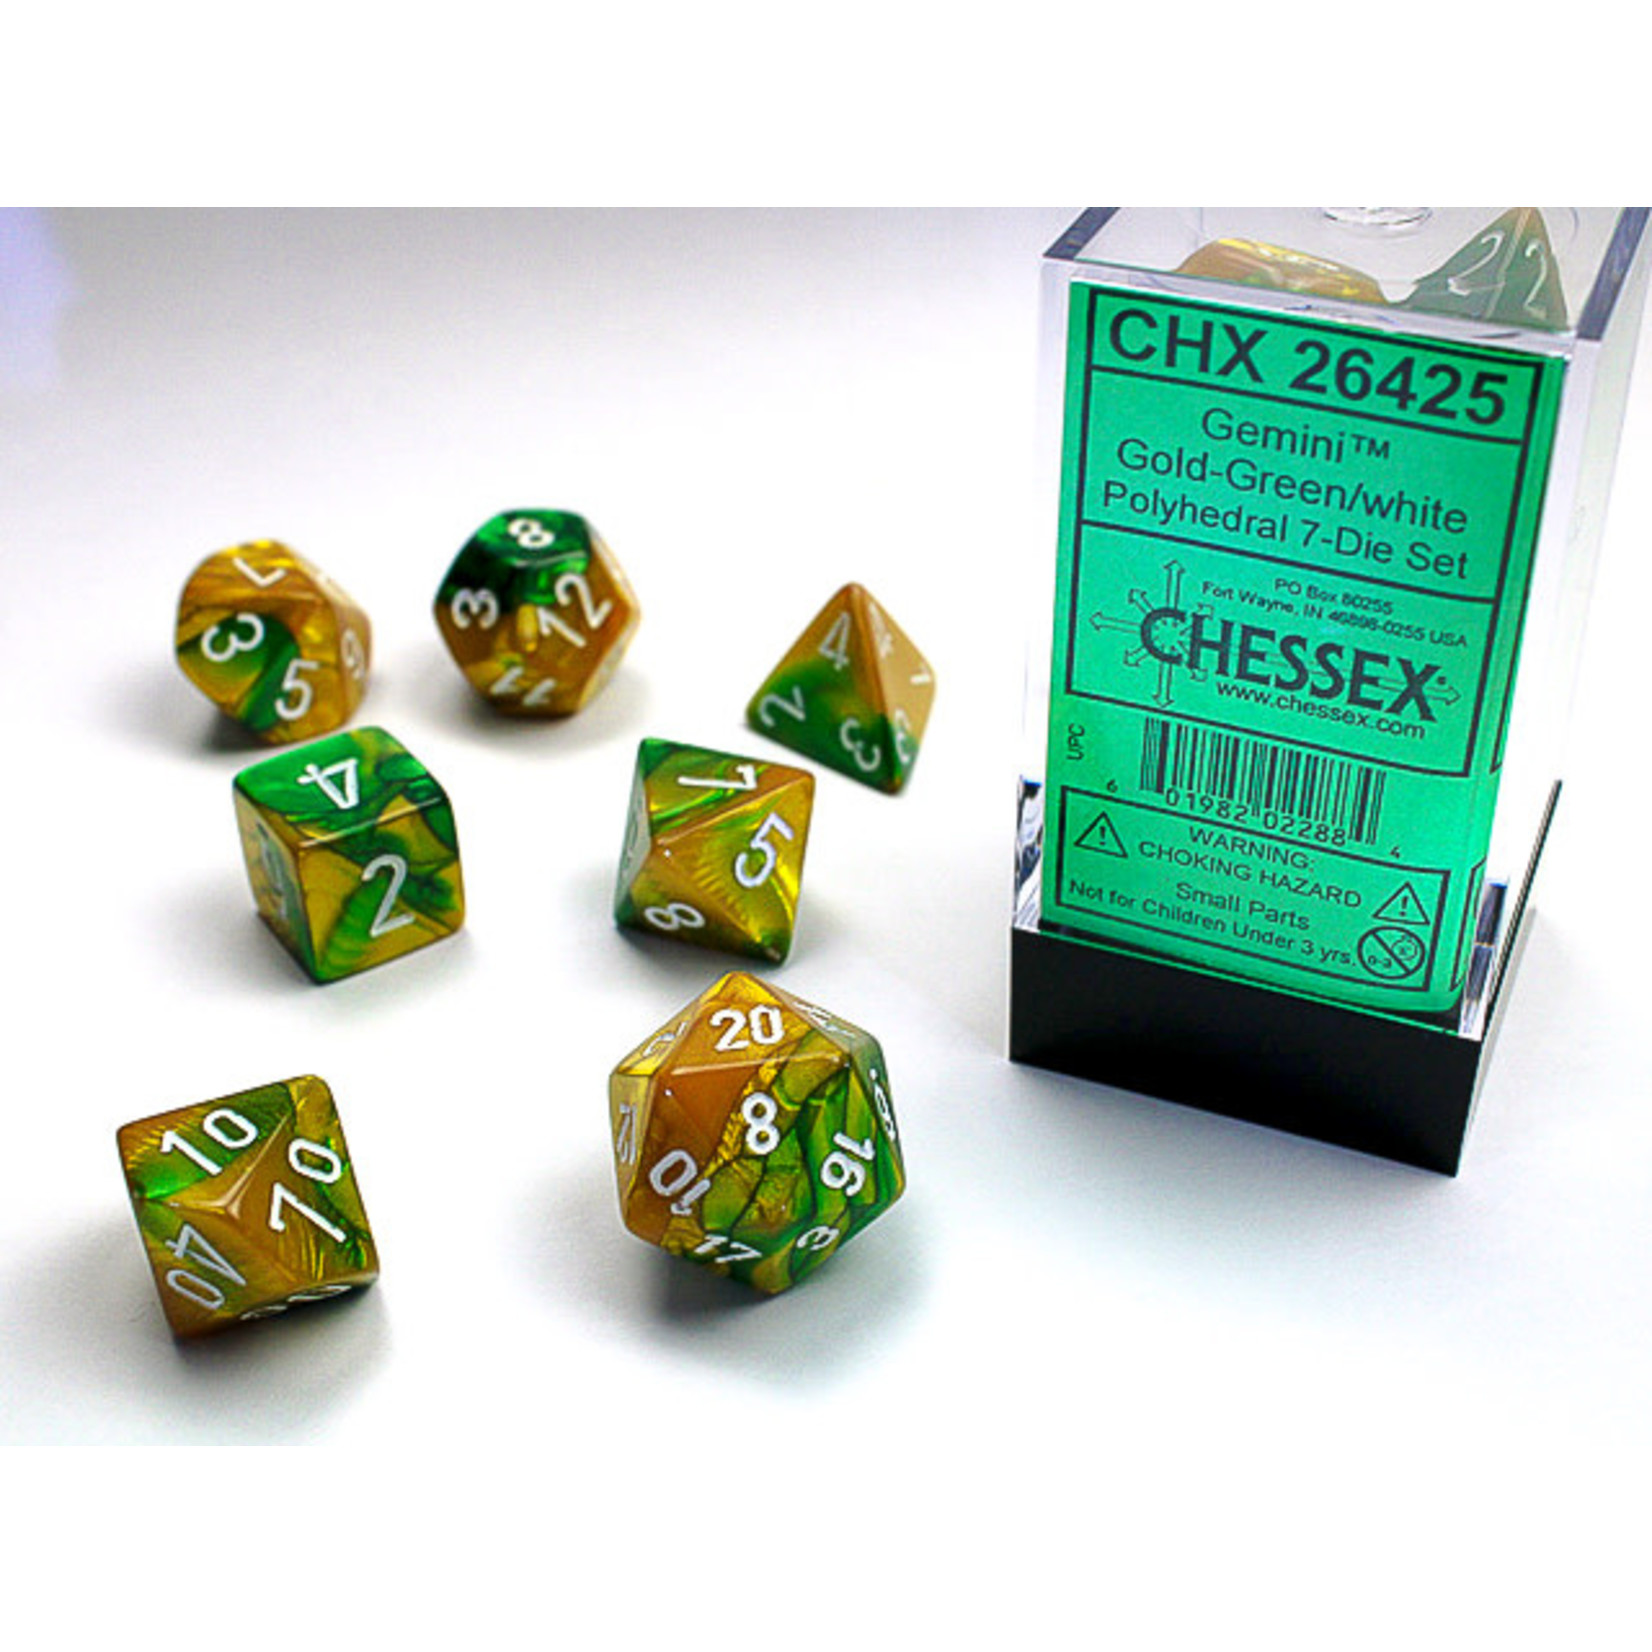 Chessex 26425 Gemini 7pc Gold-Green/White RPG Dice